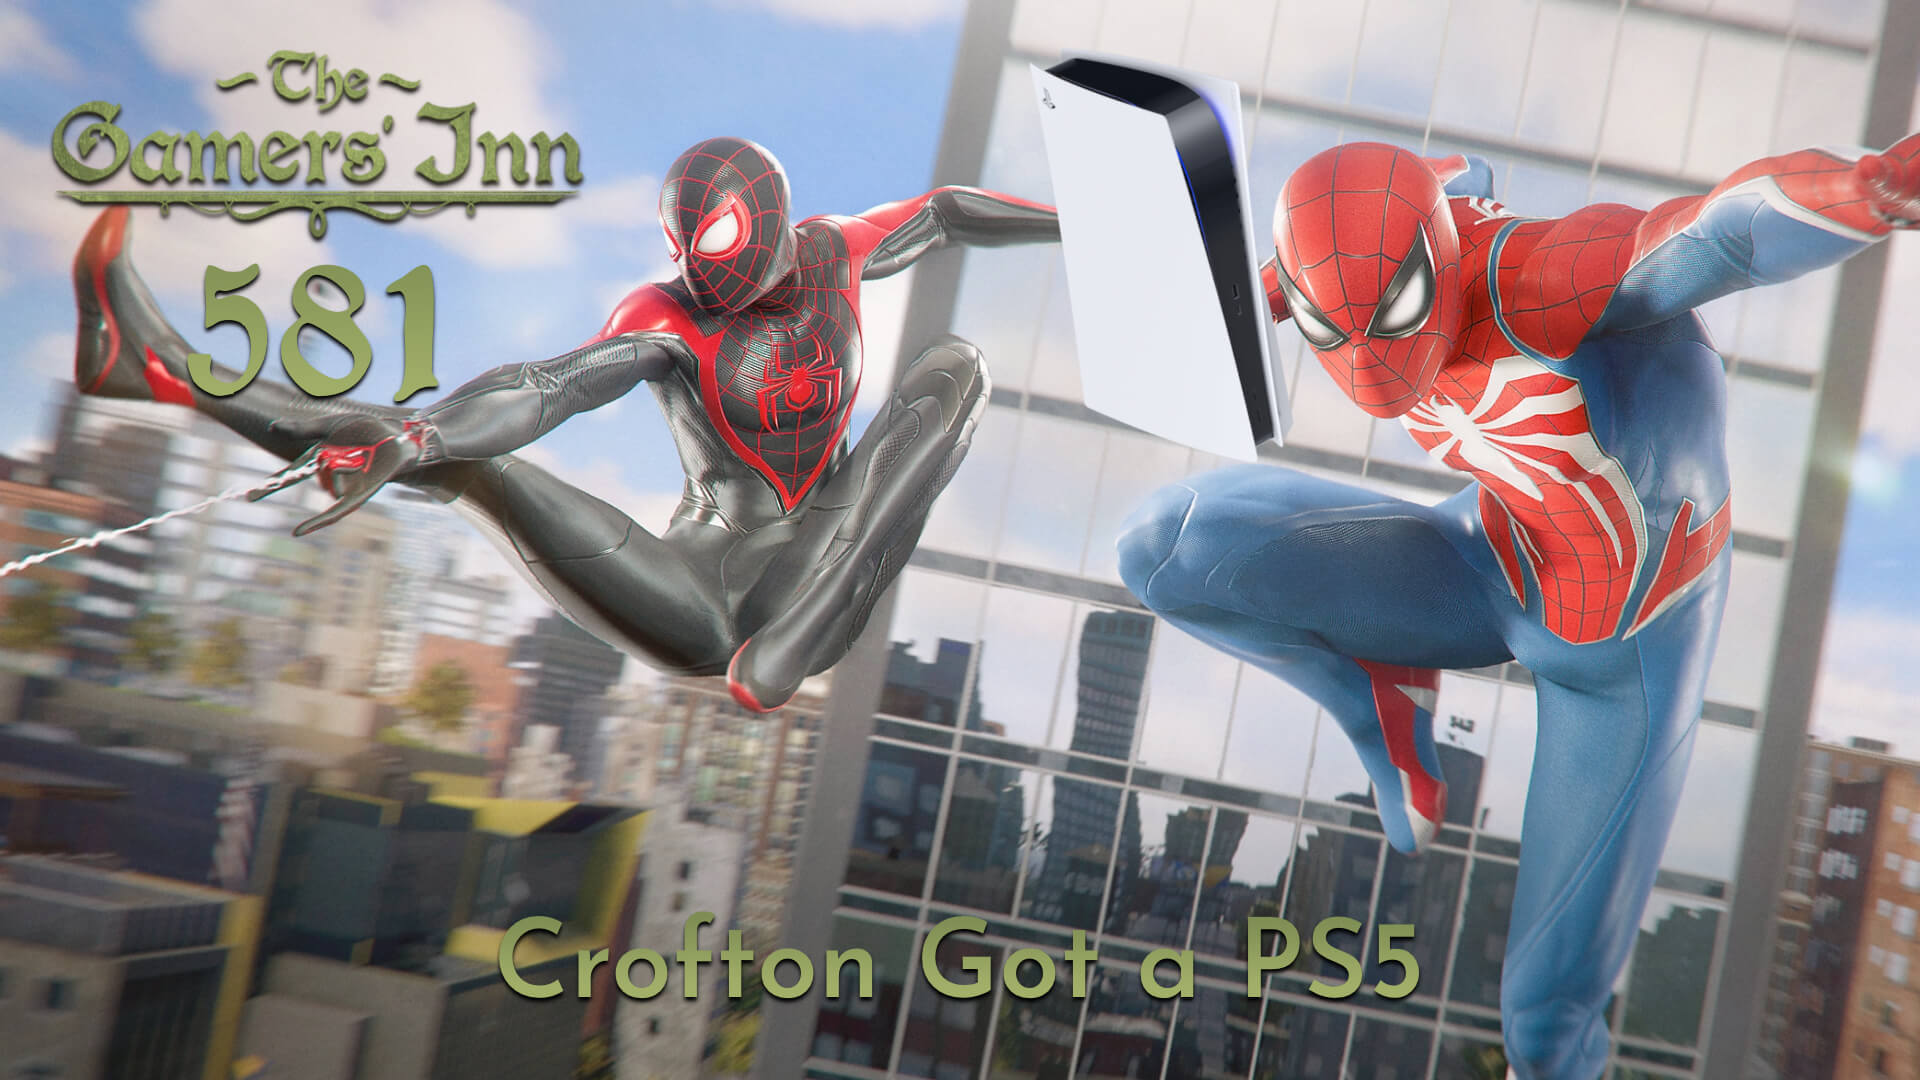 TGI 581 - Crofton Got a PS5